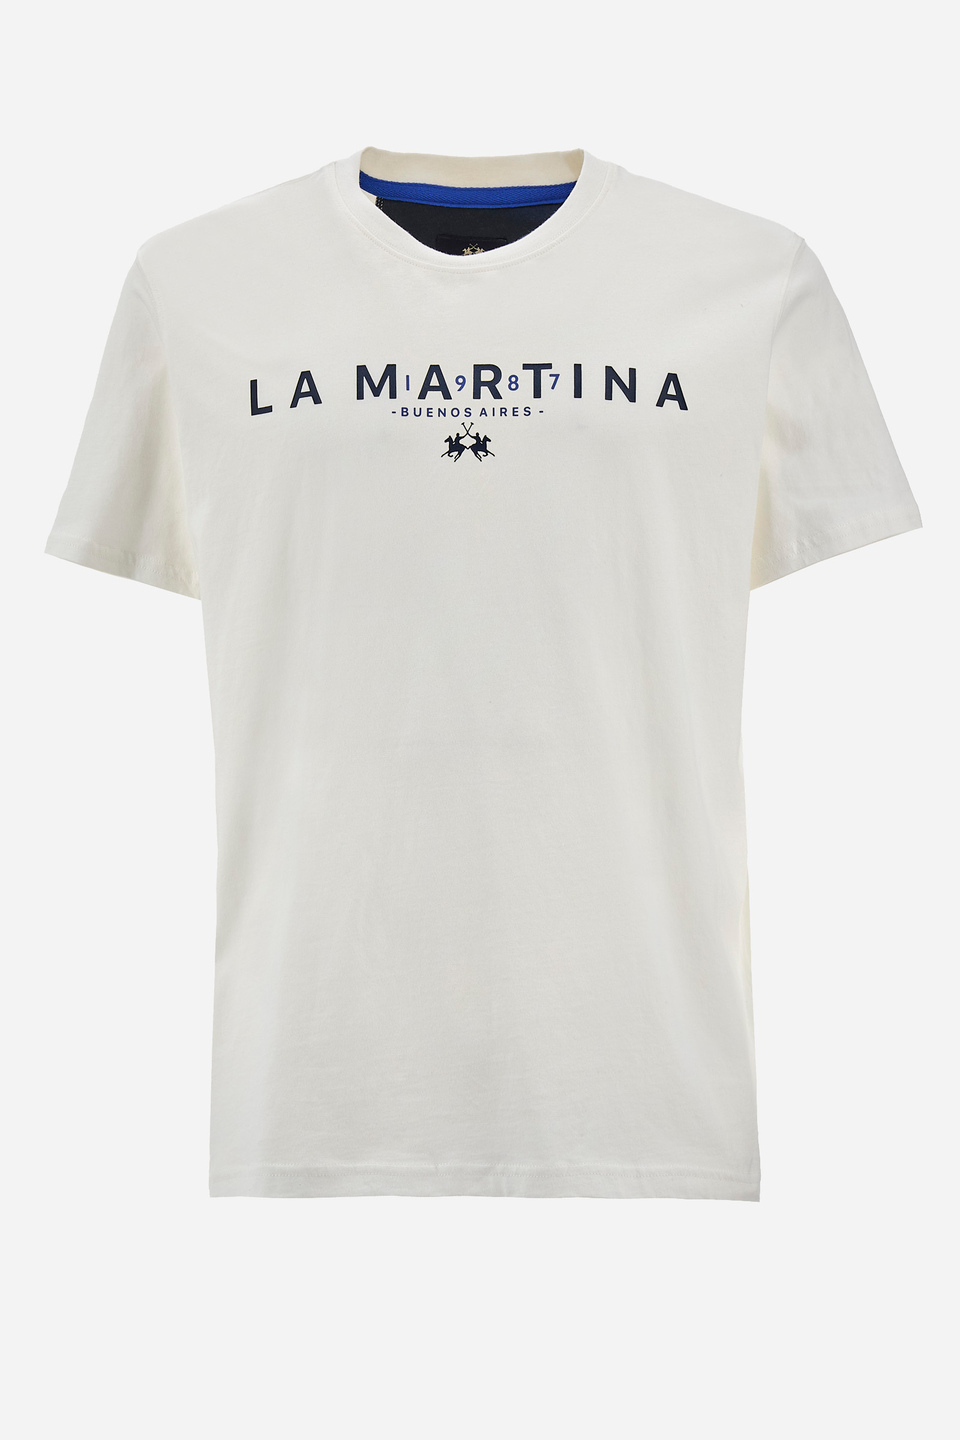 Herren-T-Shirt Regular Fit - Warley | La Martina - Official Online Shop